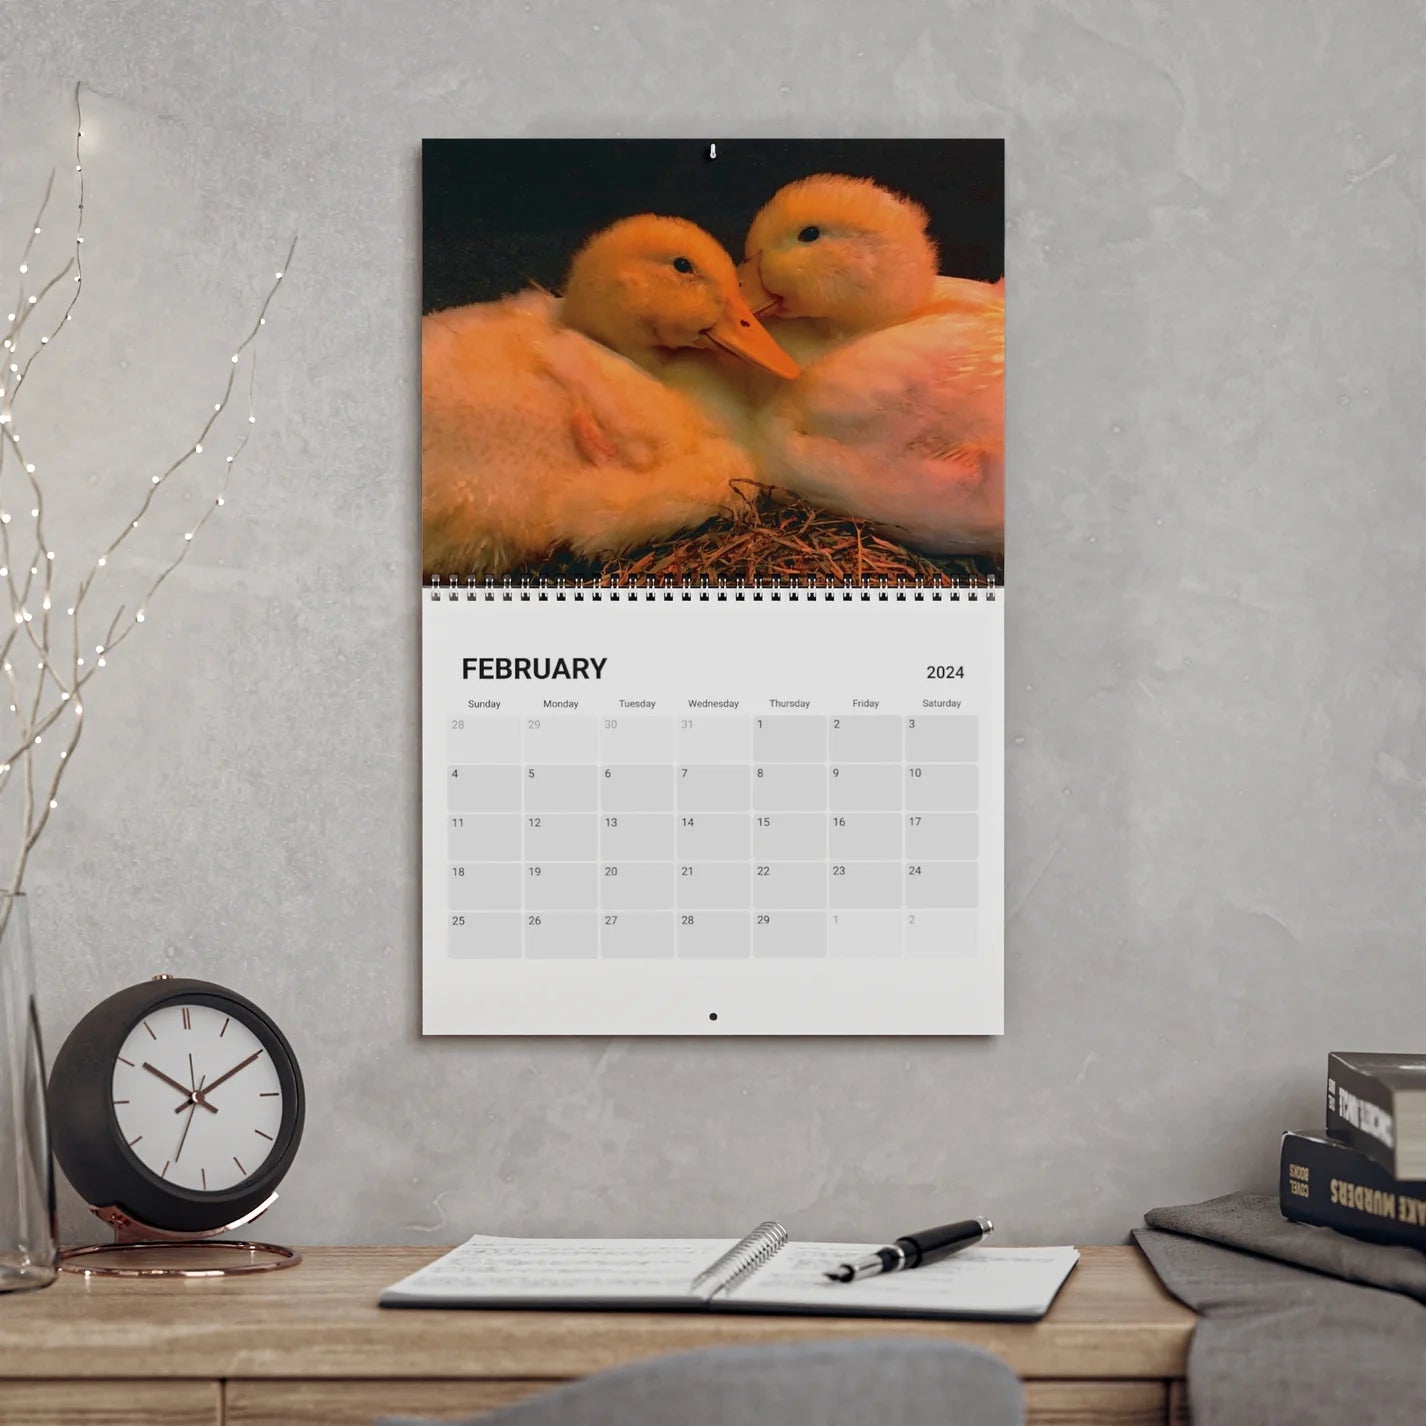 Backyard Ducks 2024 Wall Calendar